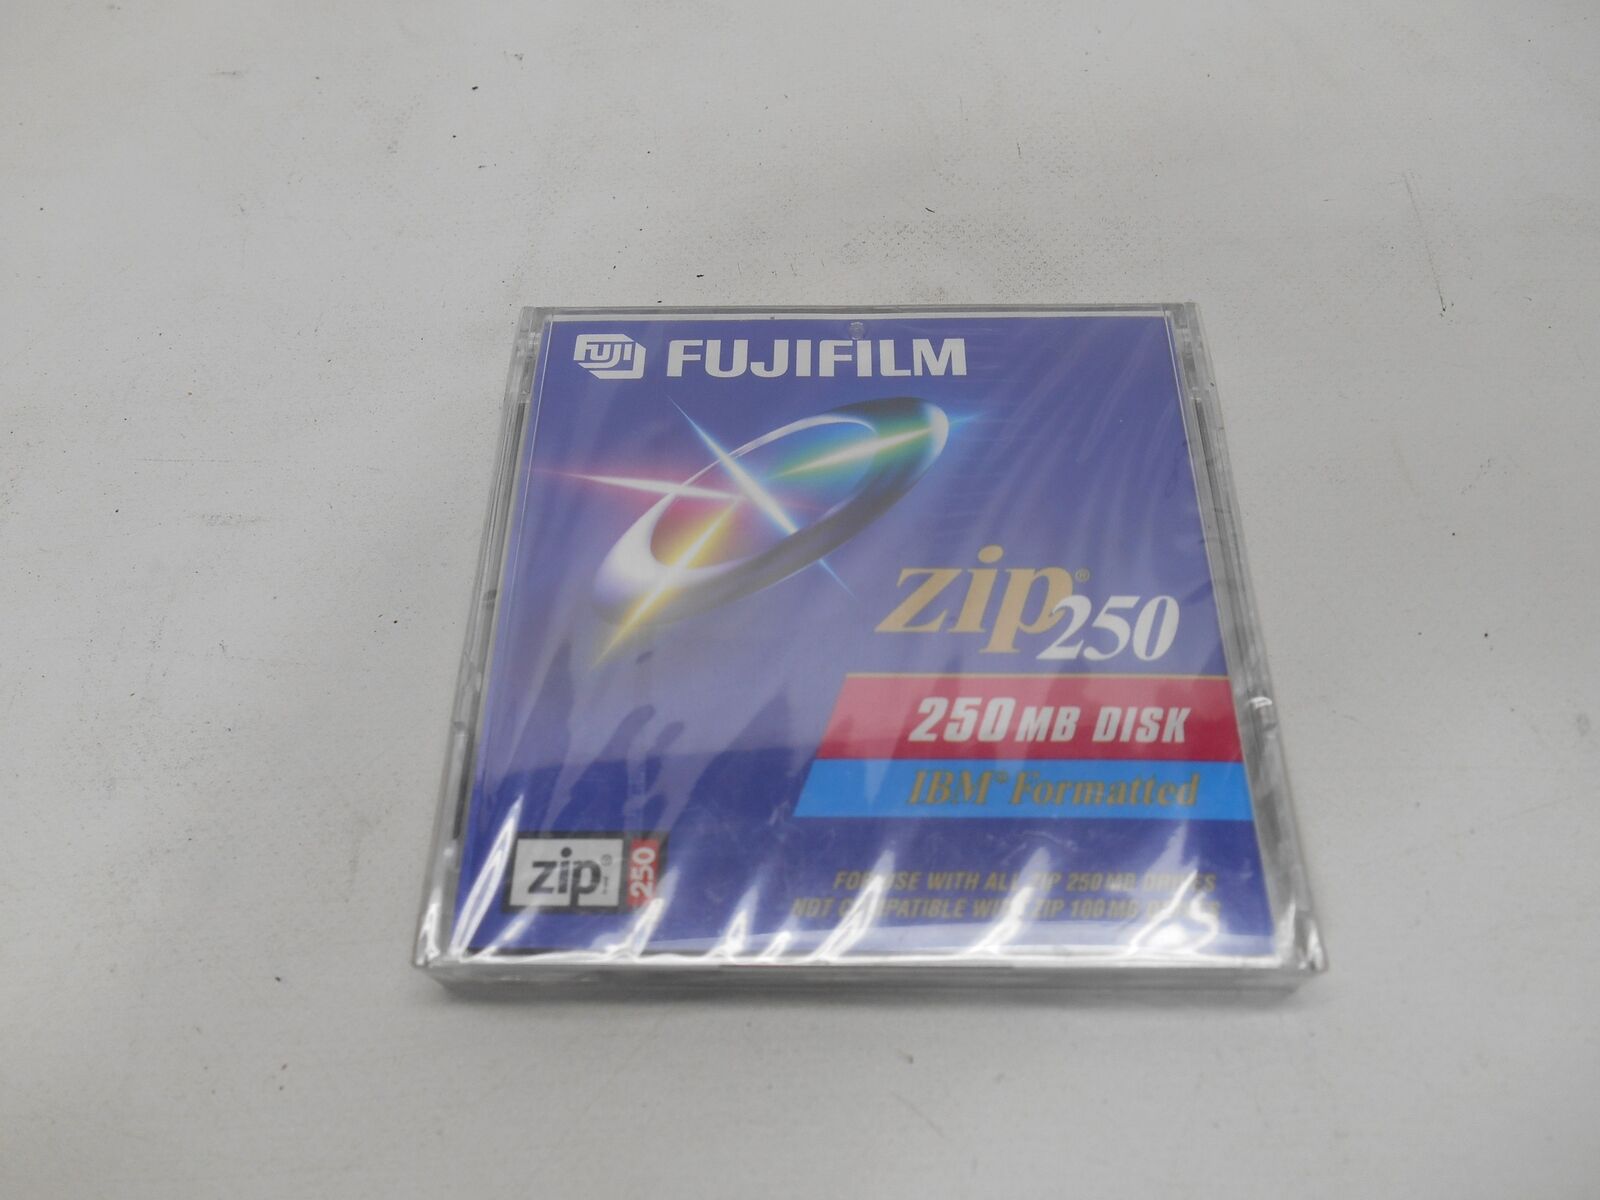 Lot of 5 Fujifilm Zip 250 MB Disk - IBM Formatted *New Unused*